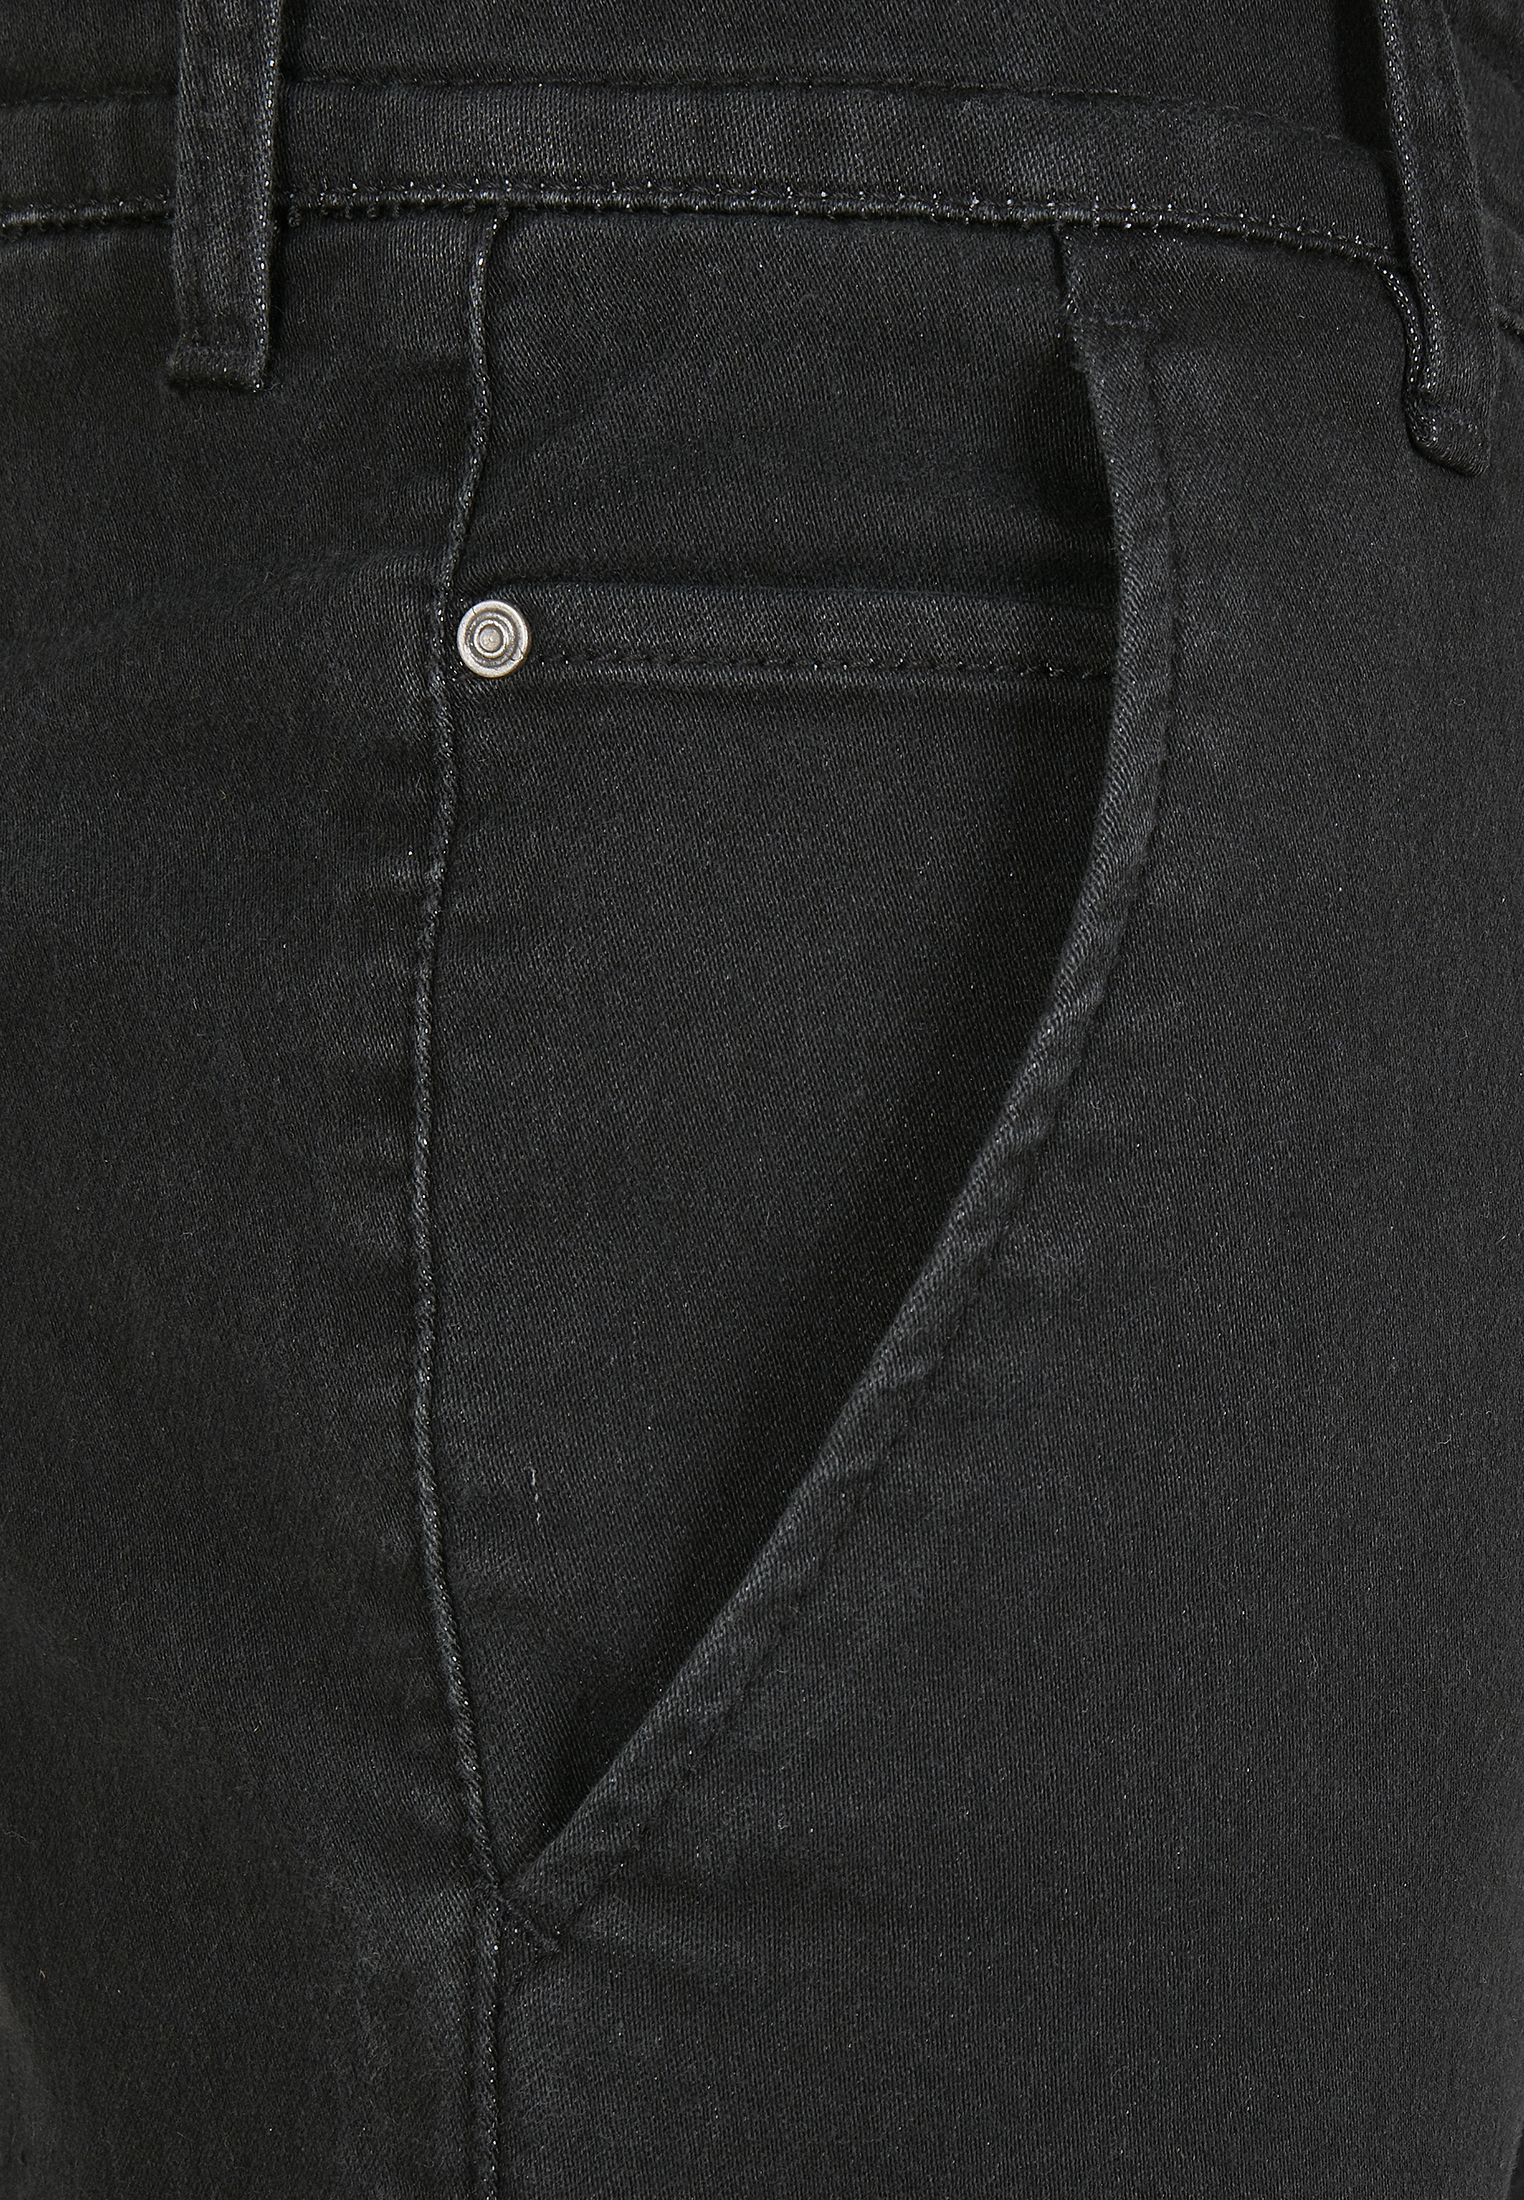 Hosen Knitted Chino Denim in Farbe black